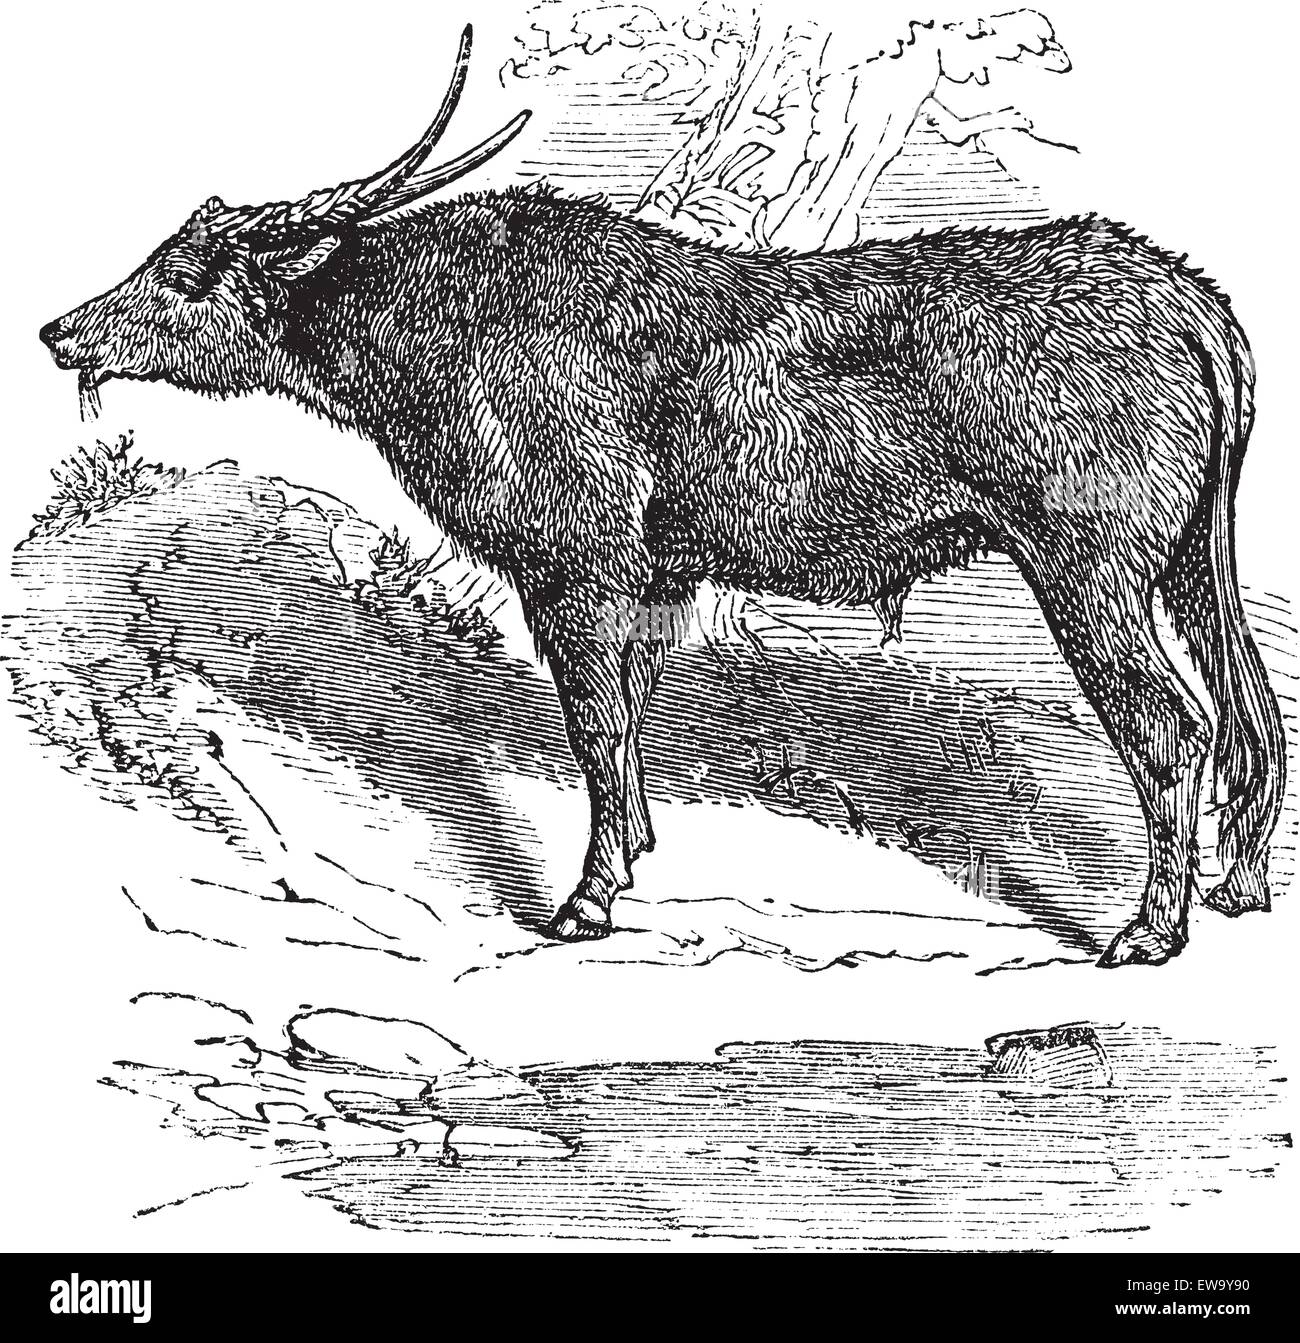 Wasserbüffel auch bekannt als Bubalus bubalis, Büffel, Inder, Vintage gravierte Illustration von Inder, Büffel, Bubalus bubalis. Stock Vektor